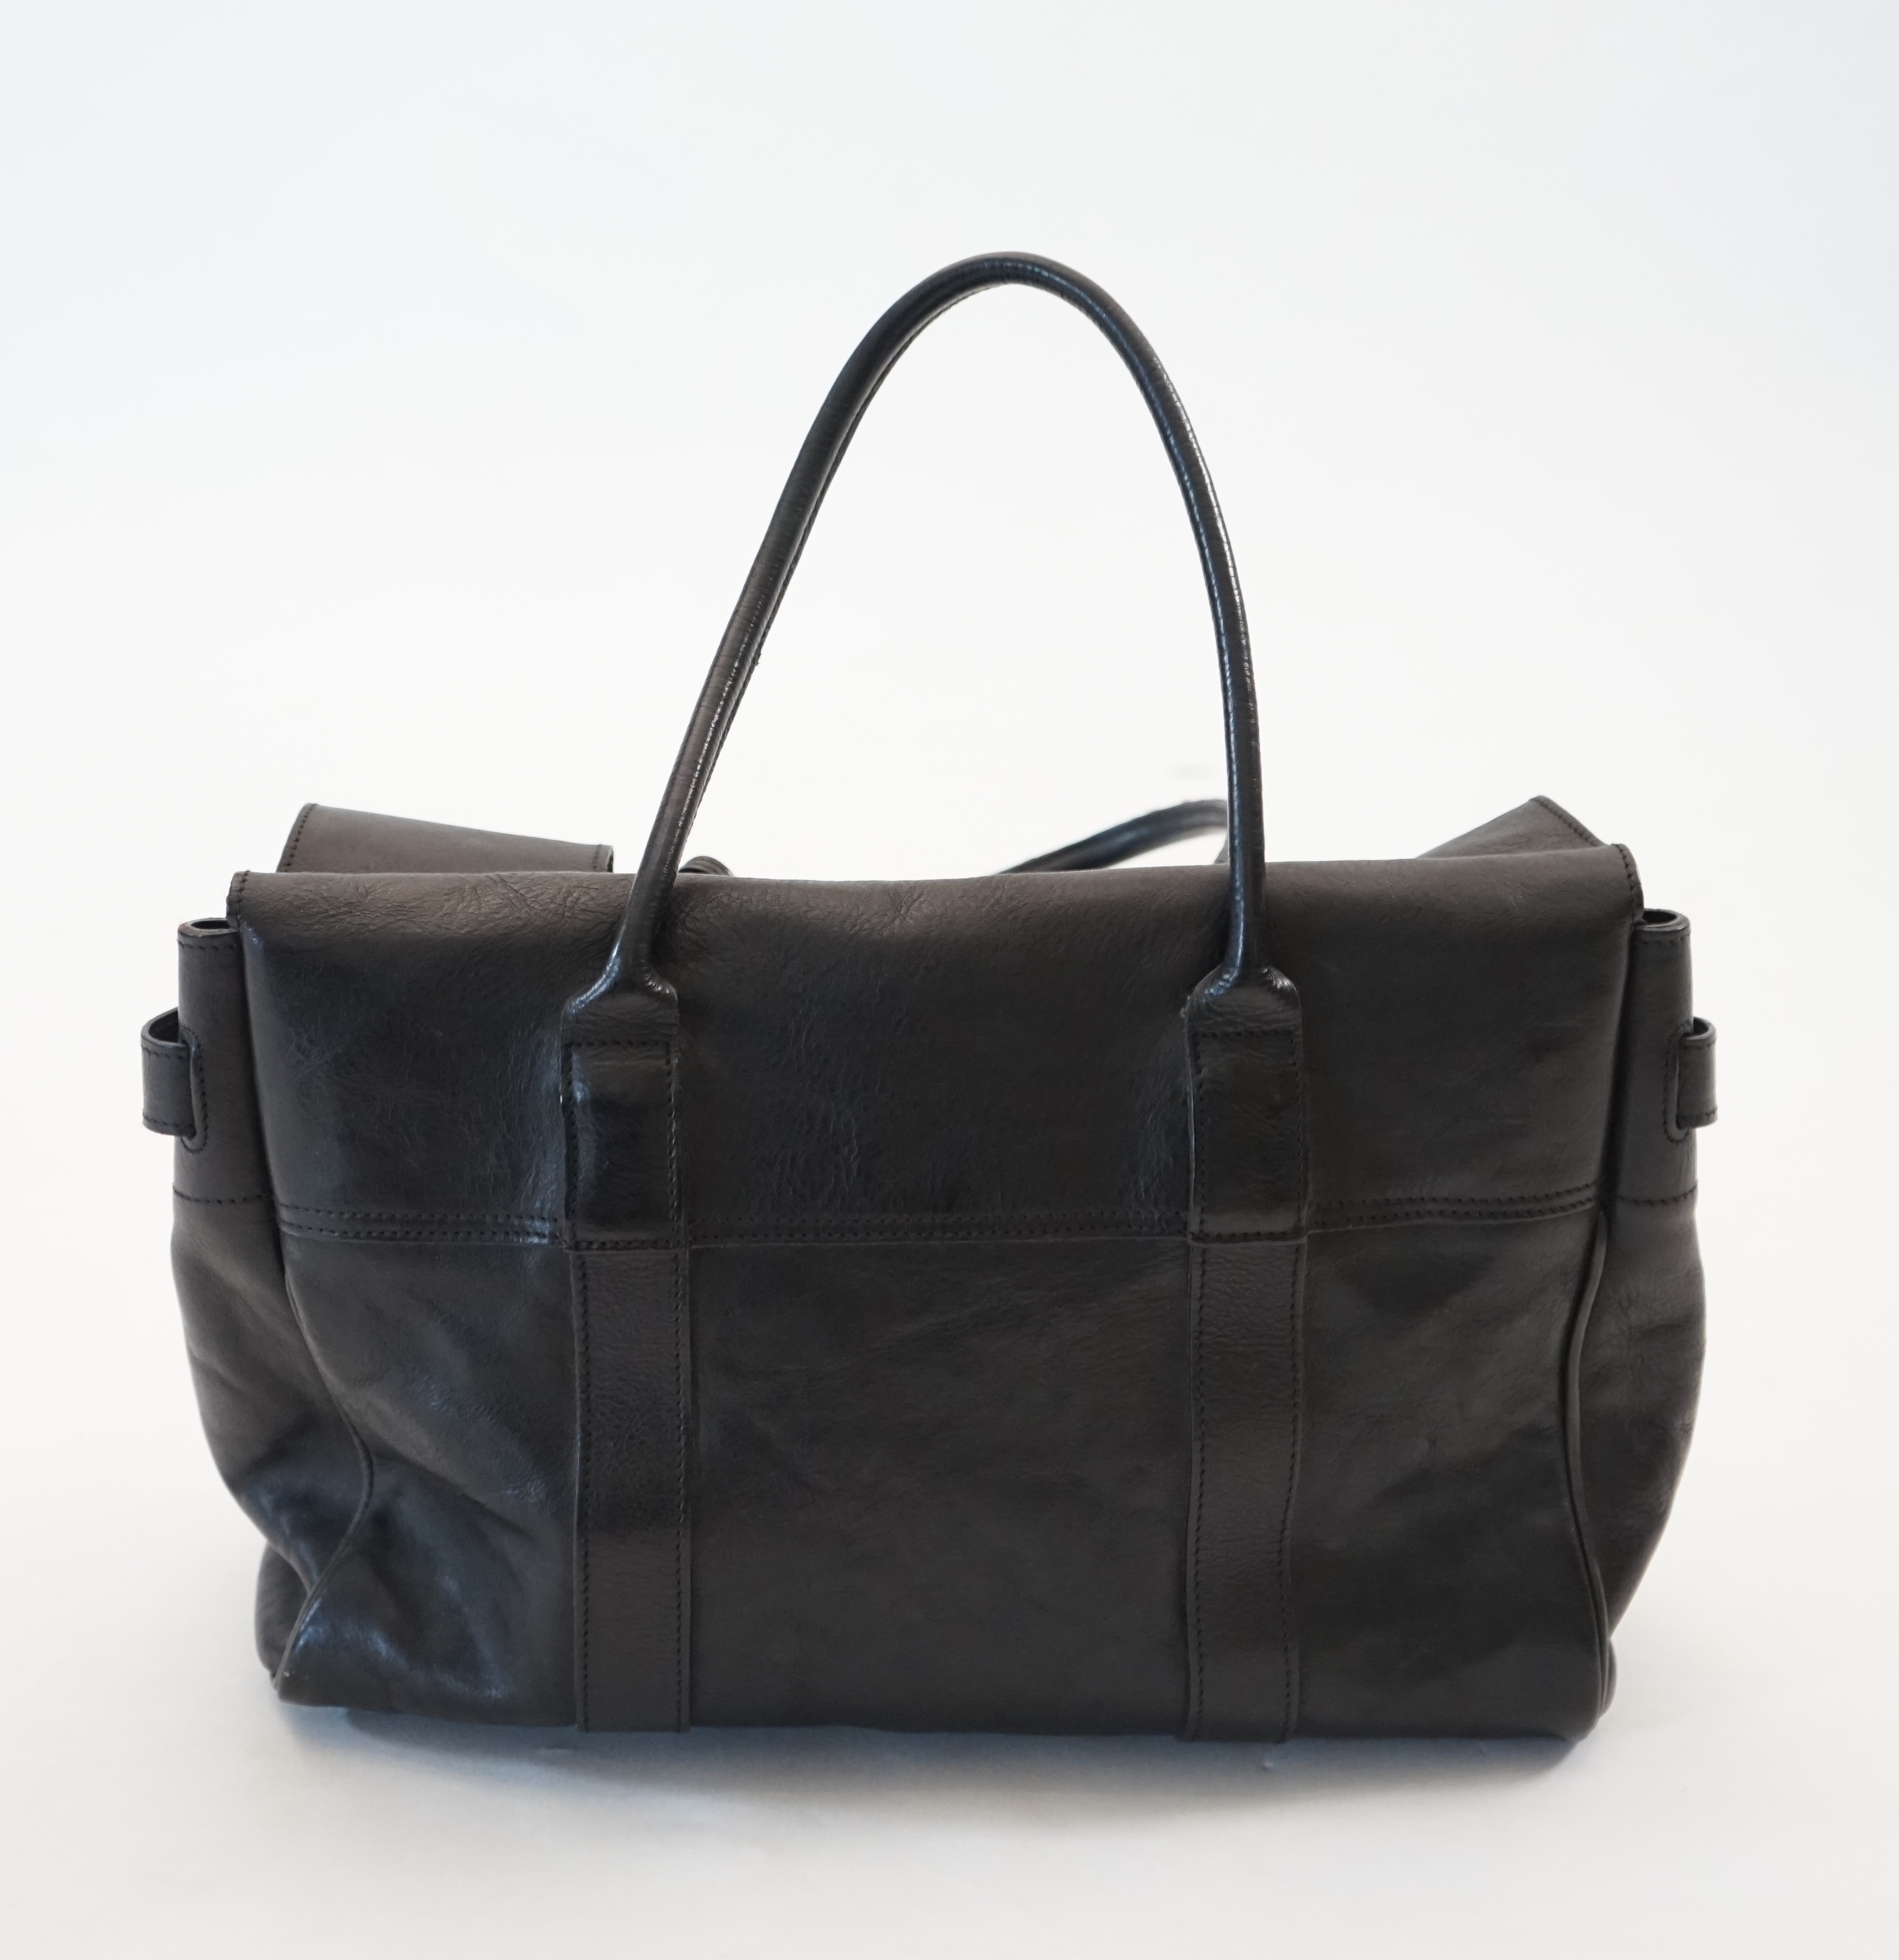 A Mulberry black leather and brass Bayswater handbag, width 36cm, depth 14cm, height 22cm